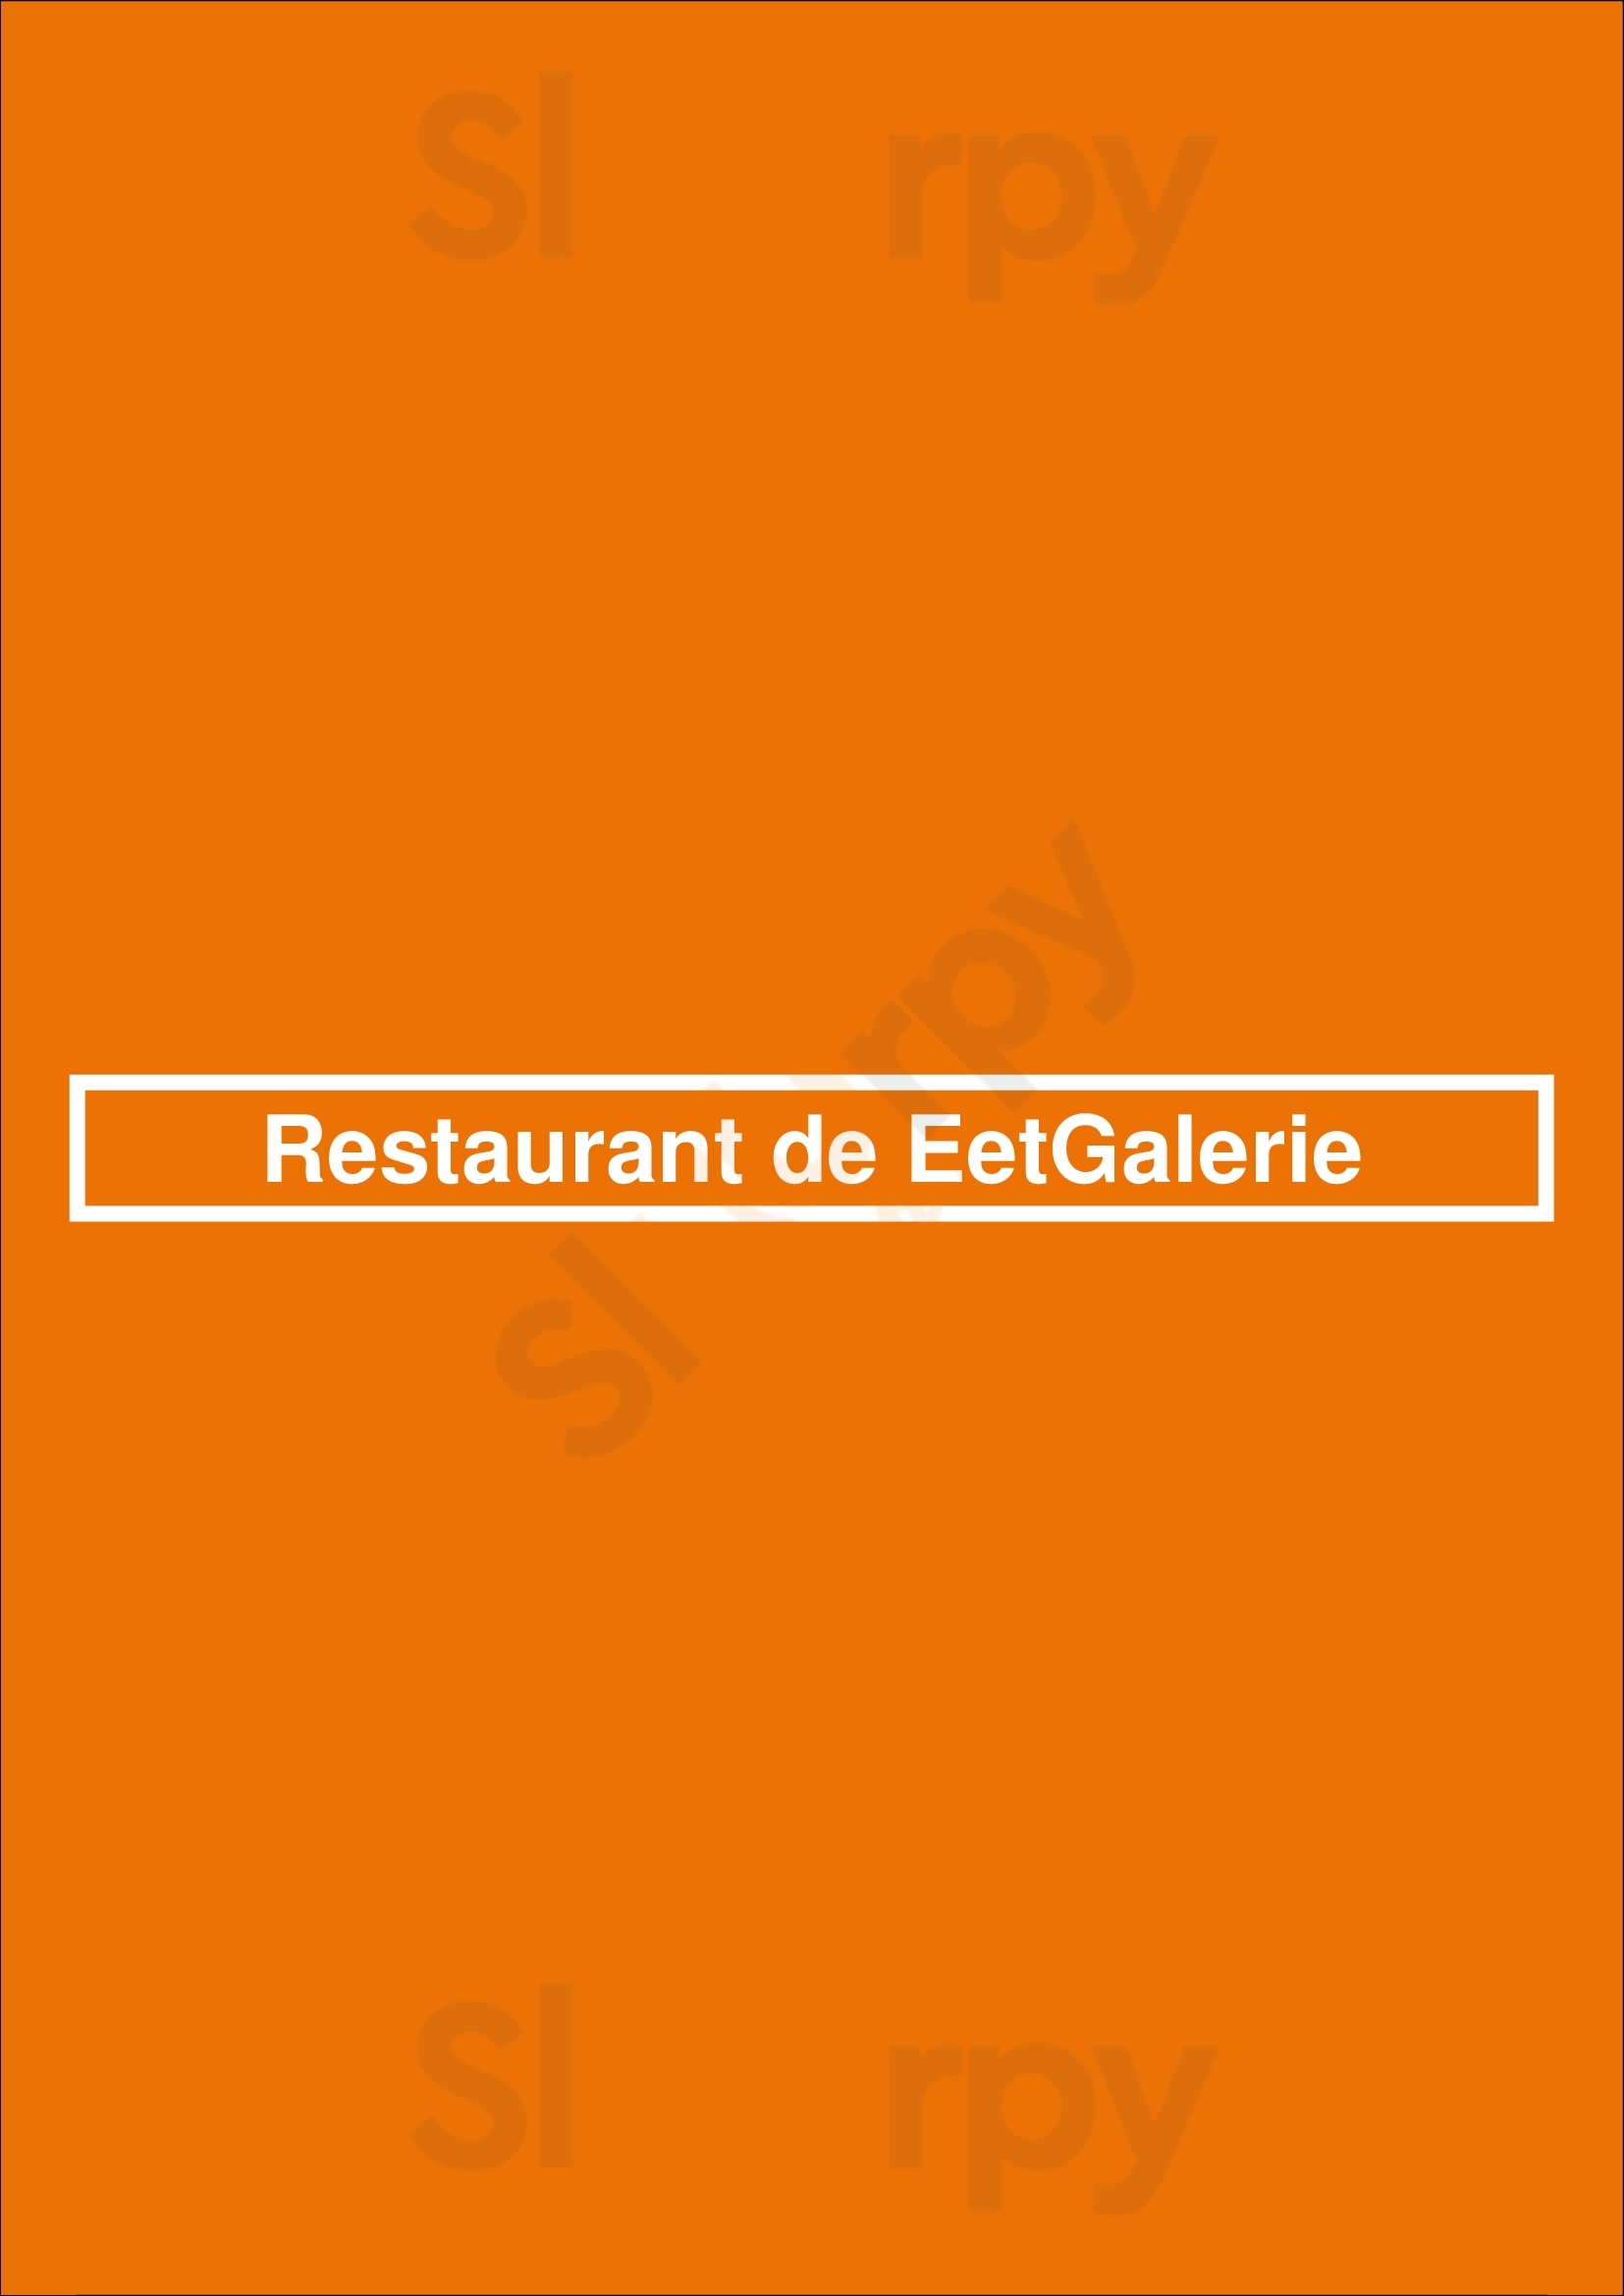 Restaurant De Eetgalerie Lochem Menu - 1